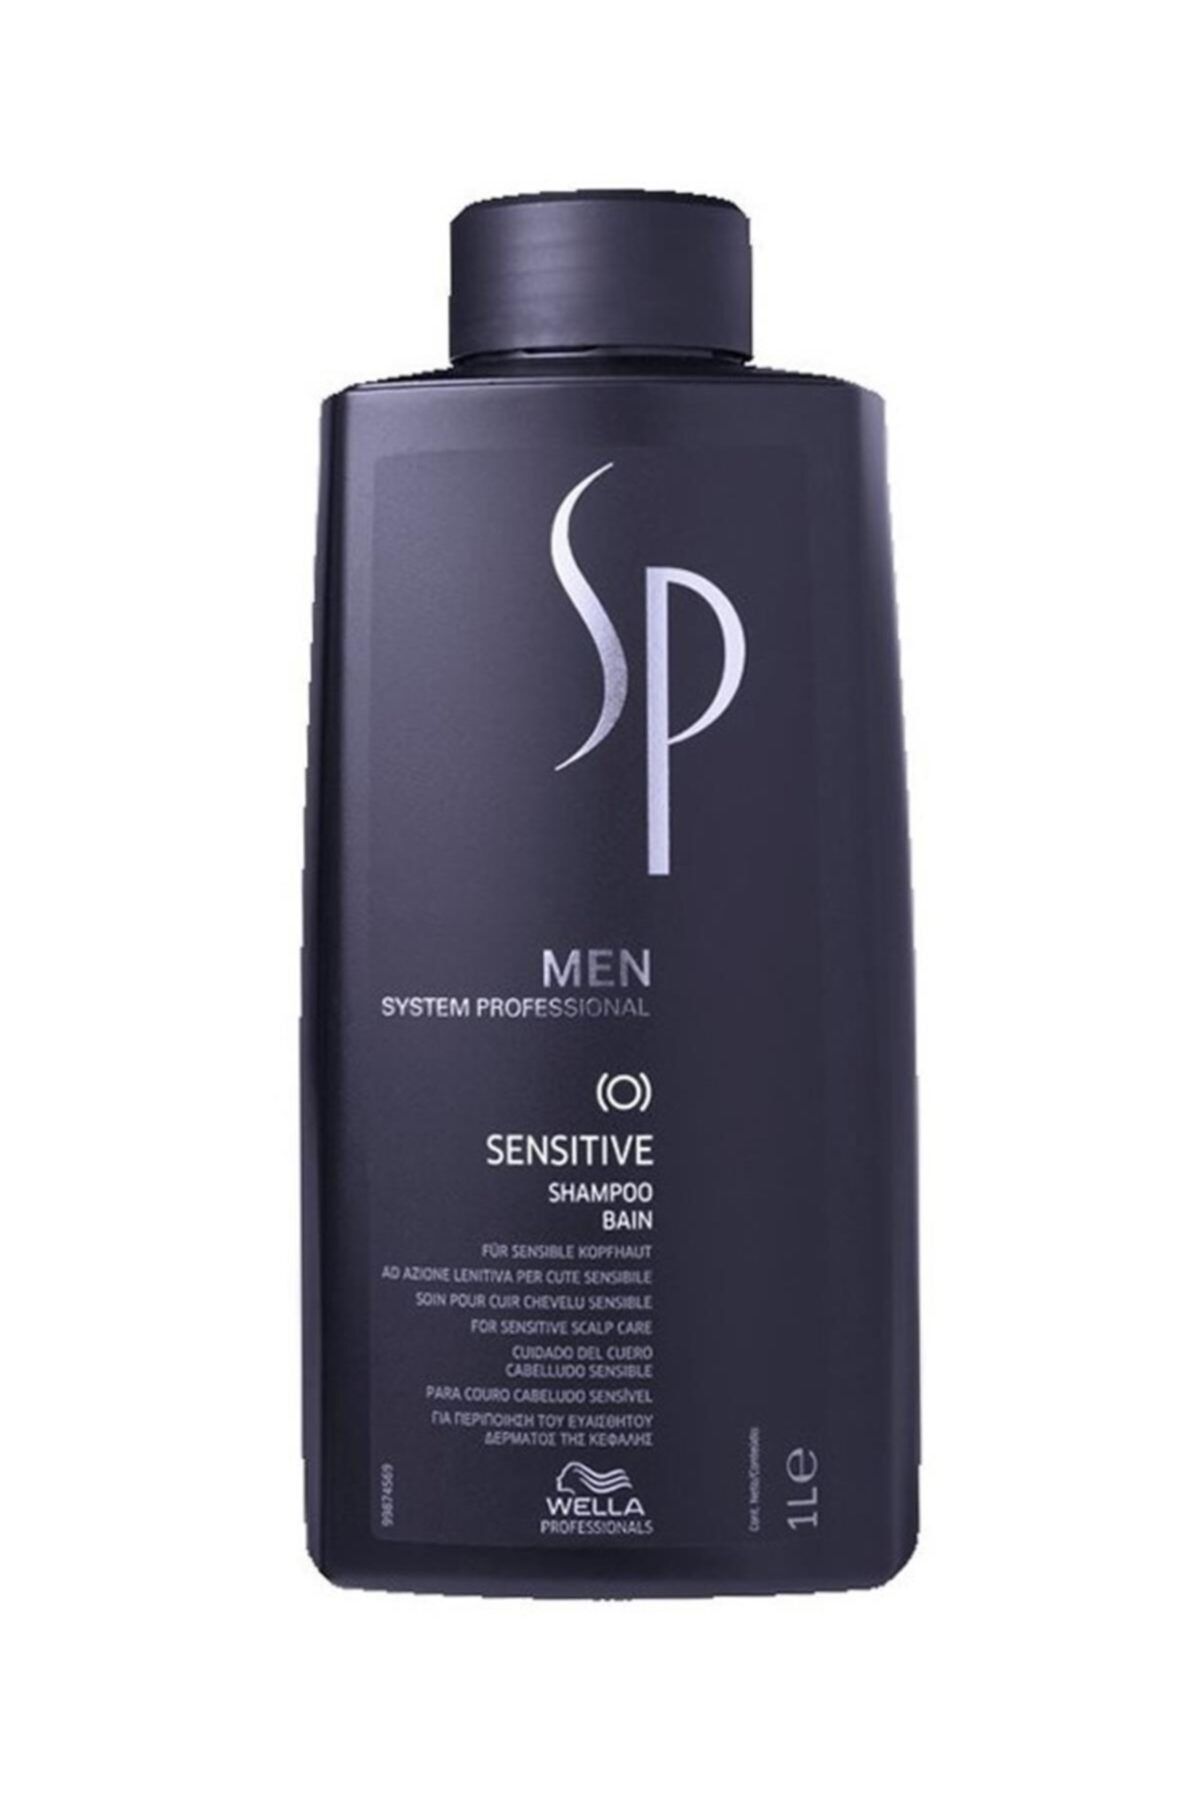 Wella Sp Men Sensitive Hassas Baş Derisi Şampuanı 1000ml